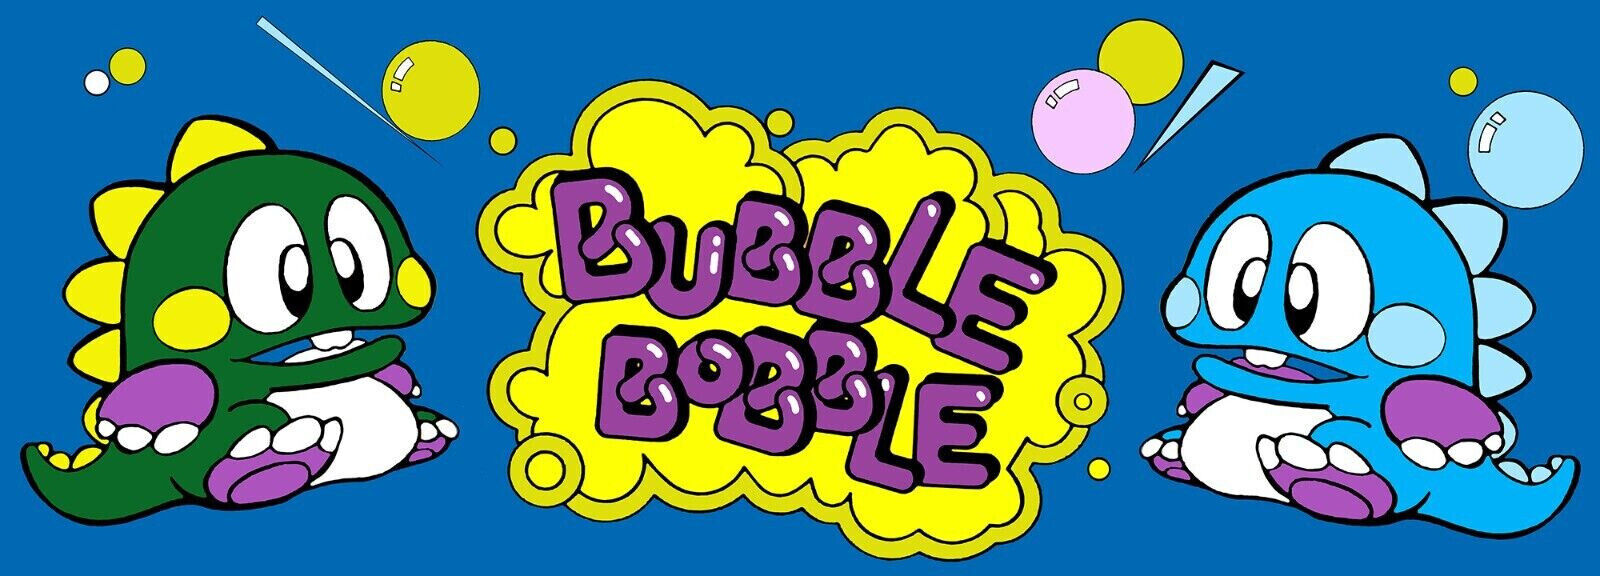 Bubble Bobble (A) Arcade Marquee/Sign (26